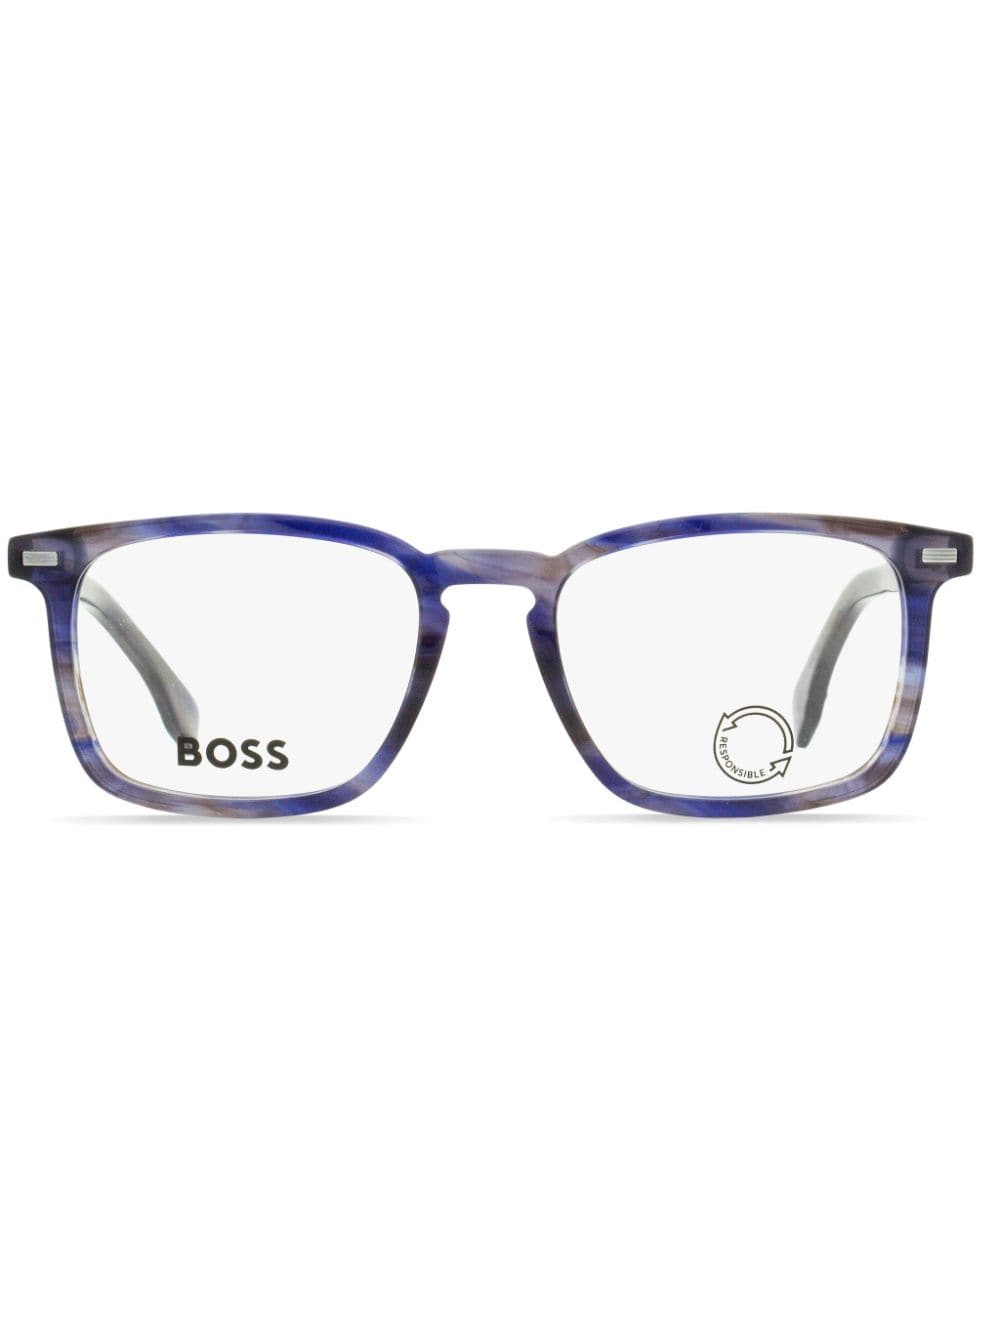 Hugo Boss 长方形镜框大理石效果眼镜 In Blue